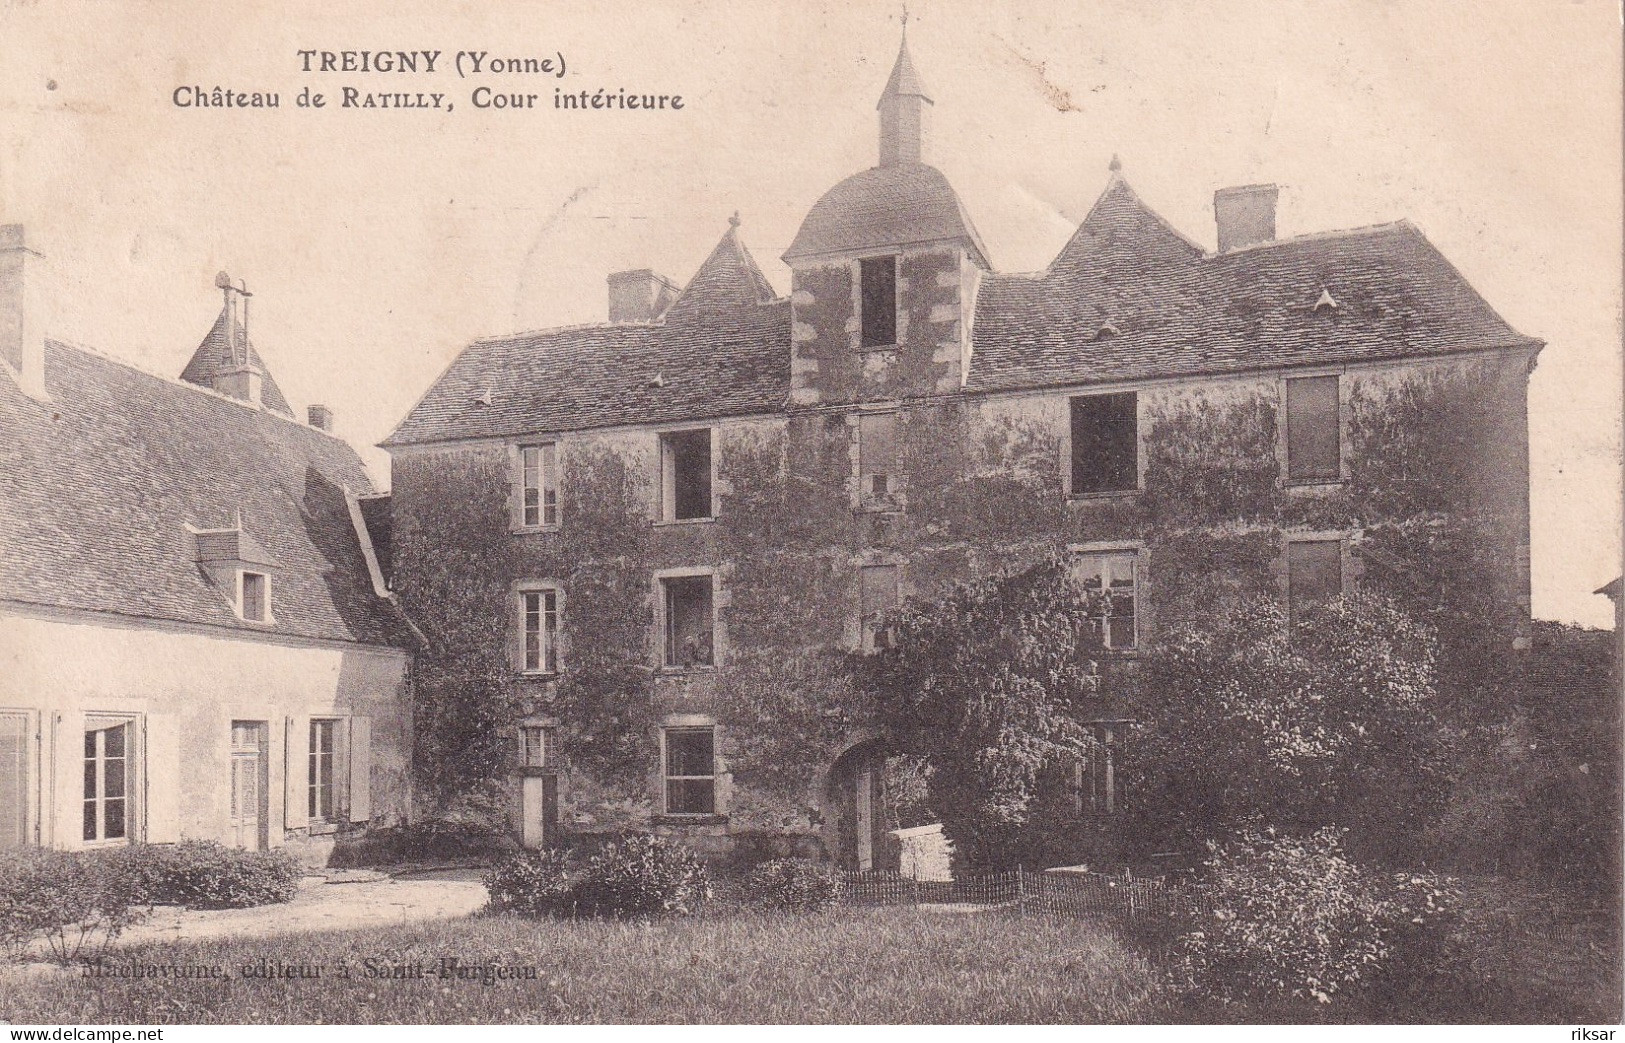 TREIGNY - Treigny